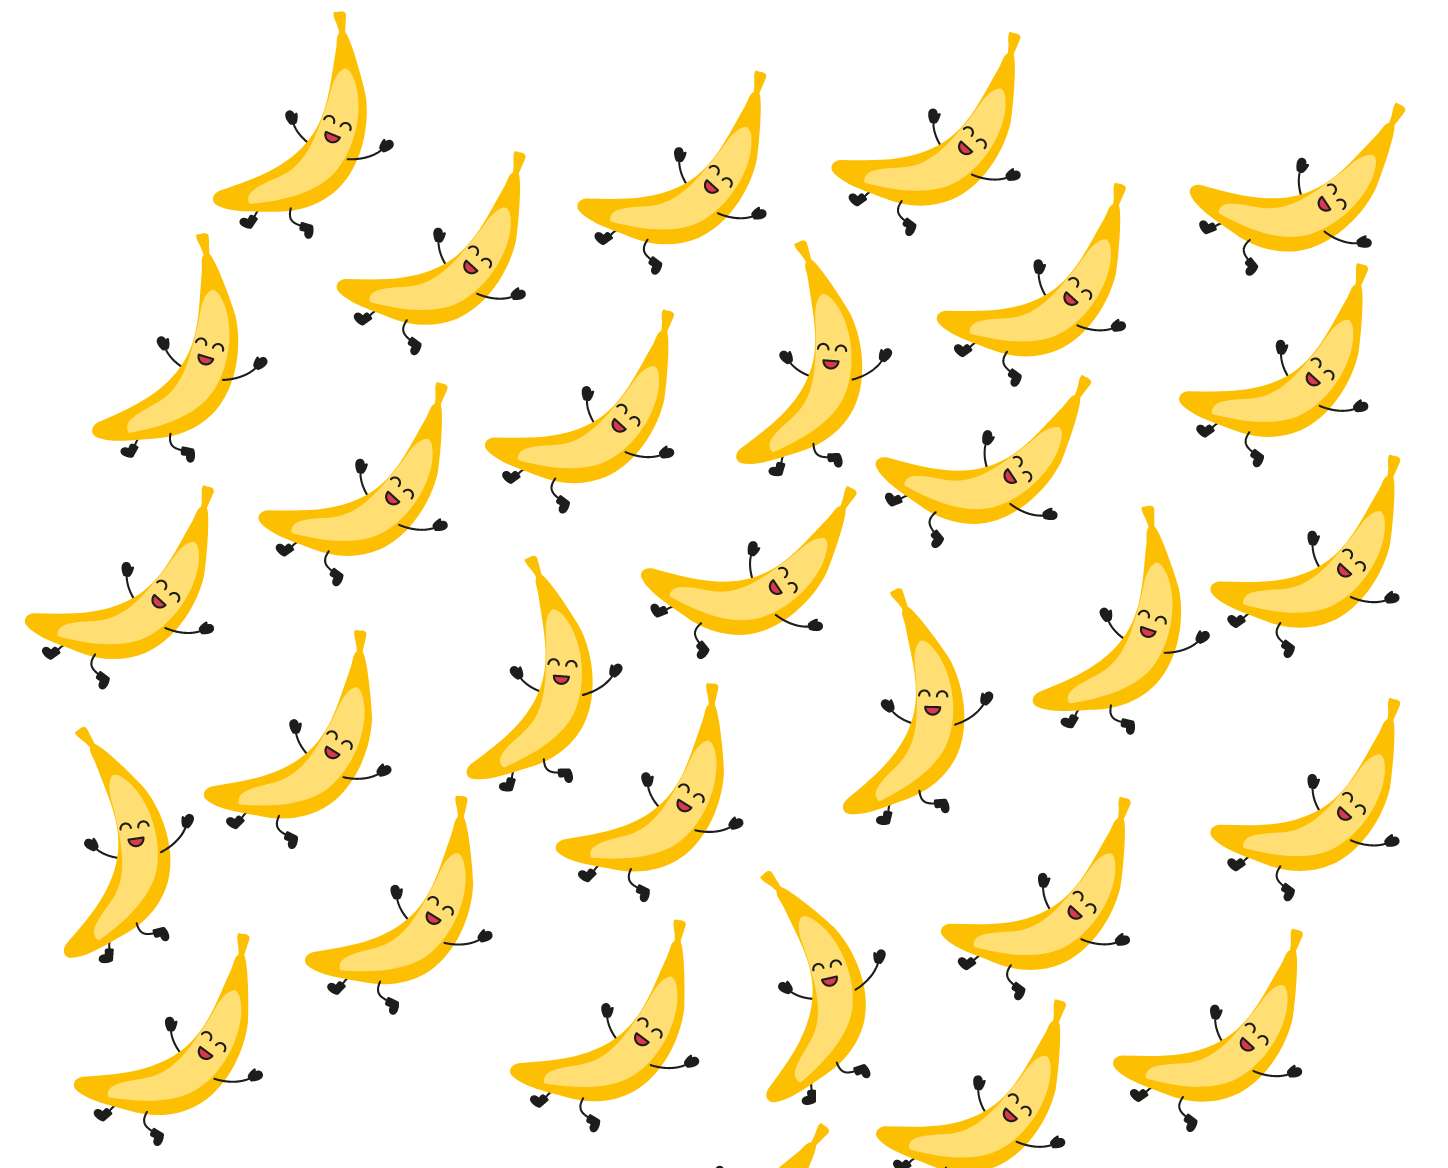 banana puzzle online a partir de fotografia